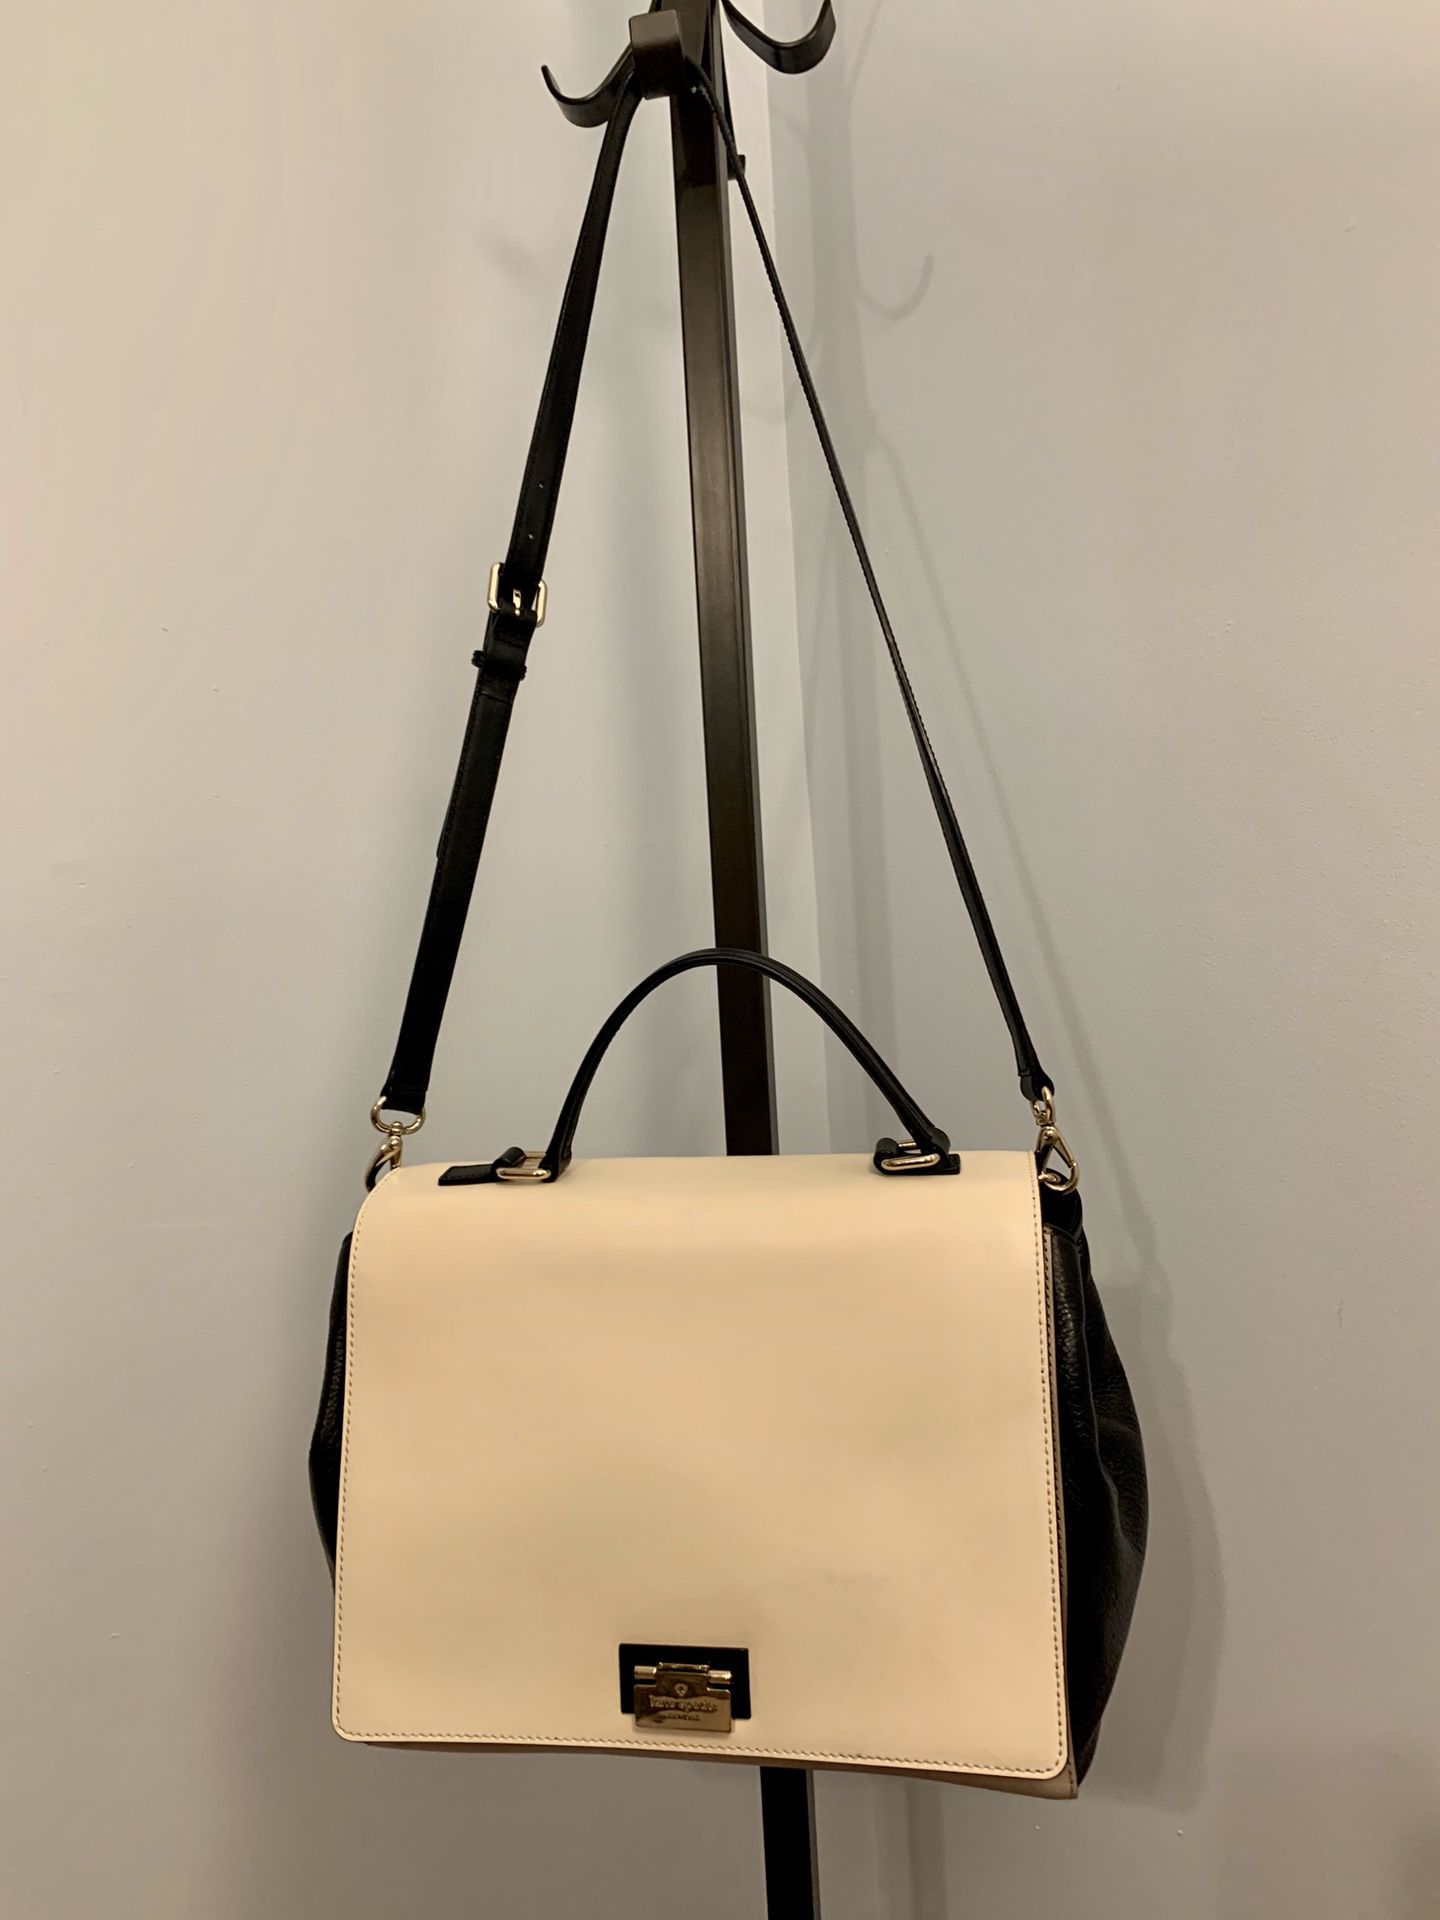 Kate Spade Leather Satchel/Handbag (Cream & Black)